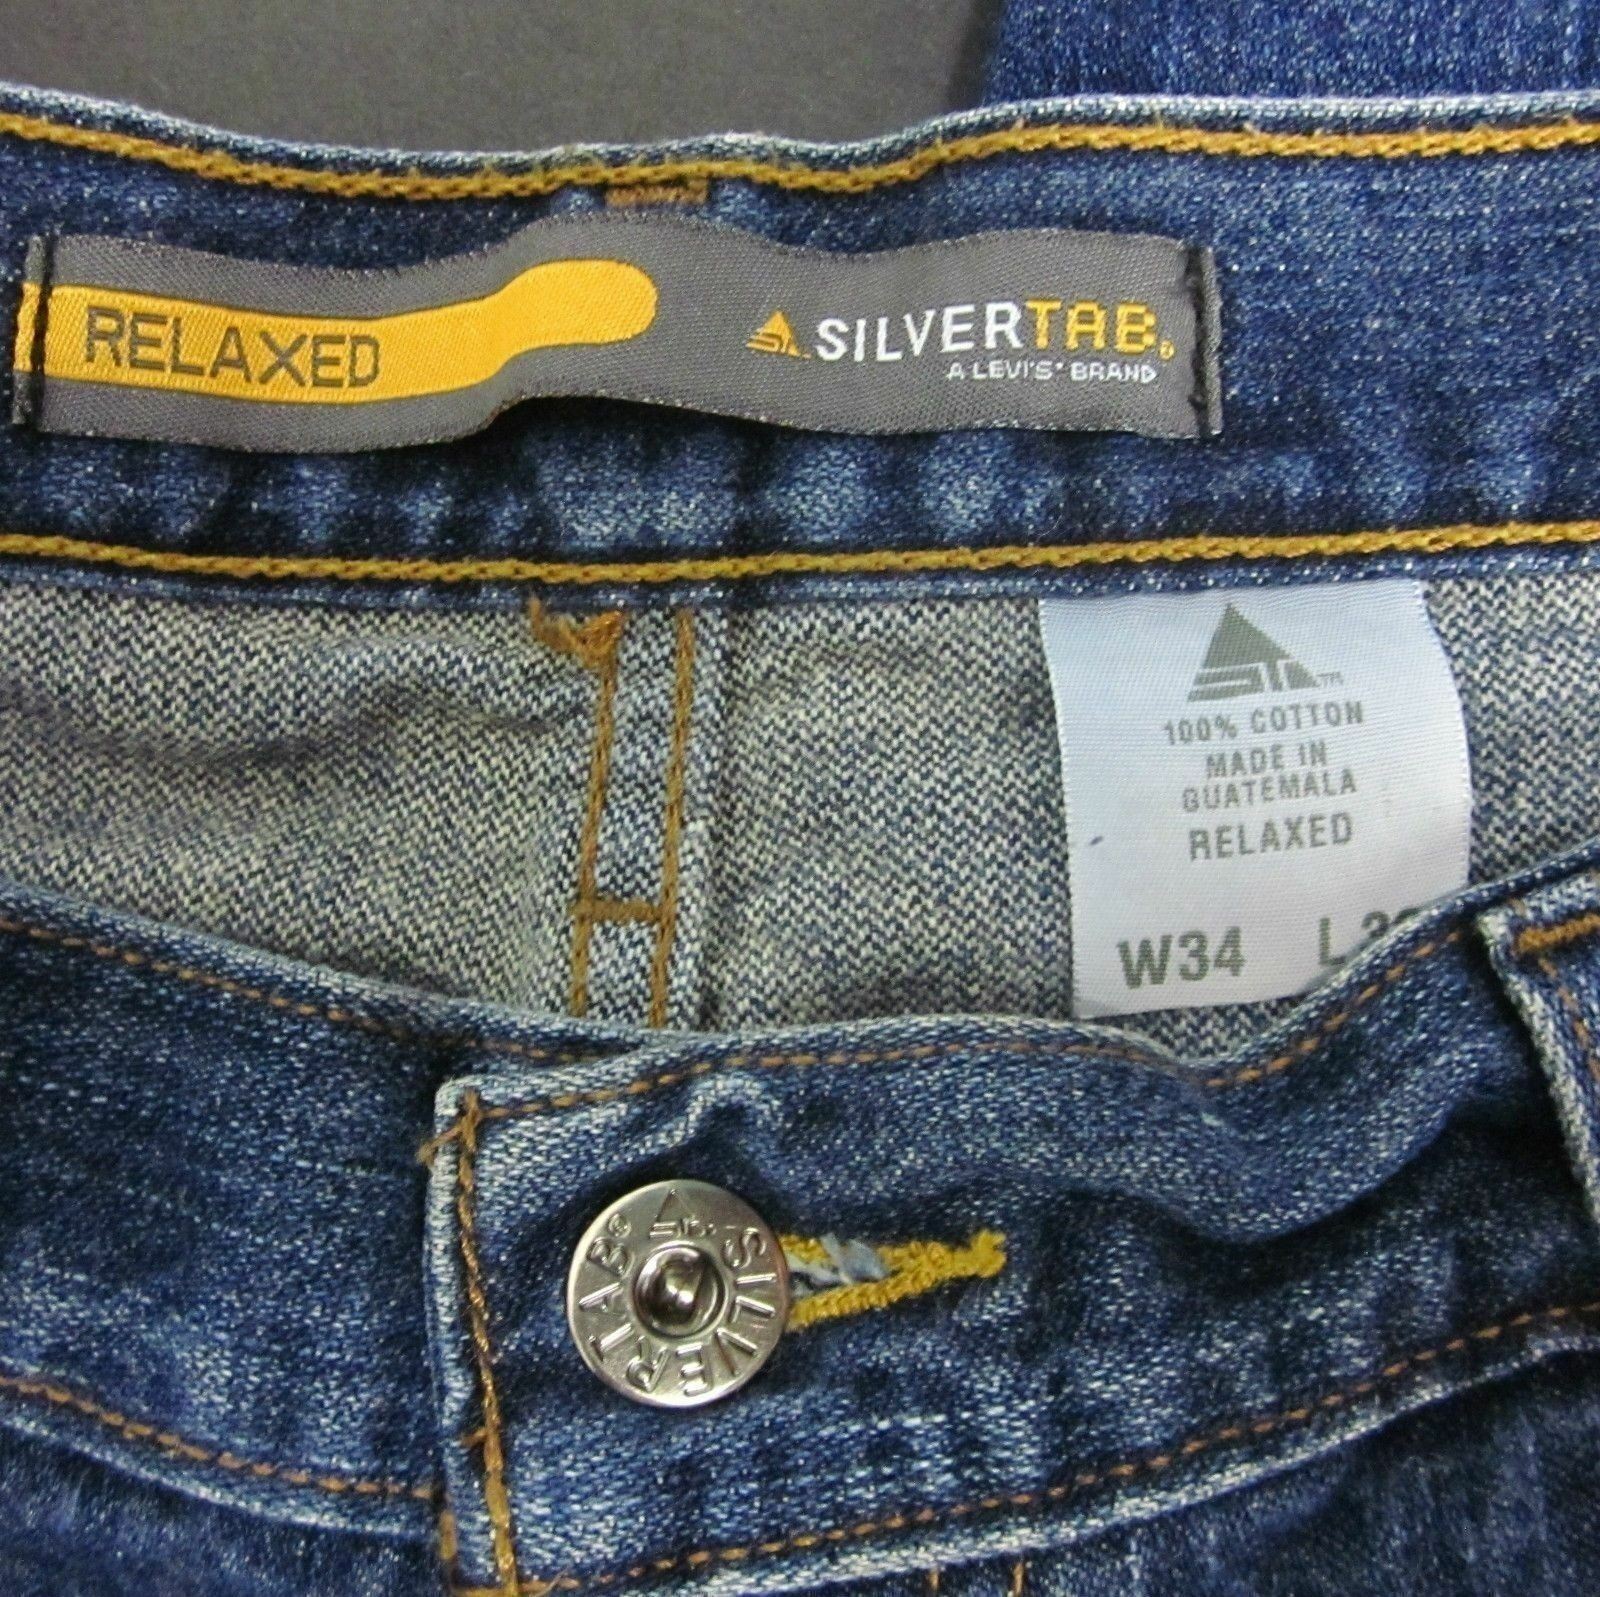 LEVI'S SILVER TAB Relaxed Fit Dark Blue Jeans Mens W34 L26 Original 100 ...